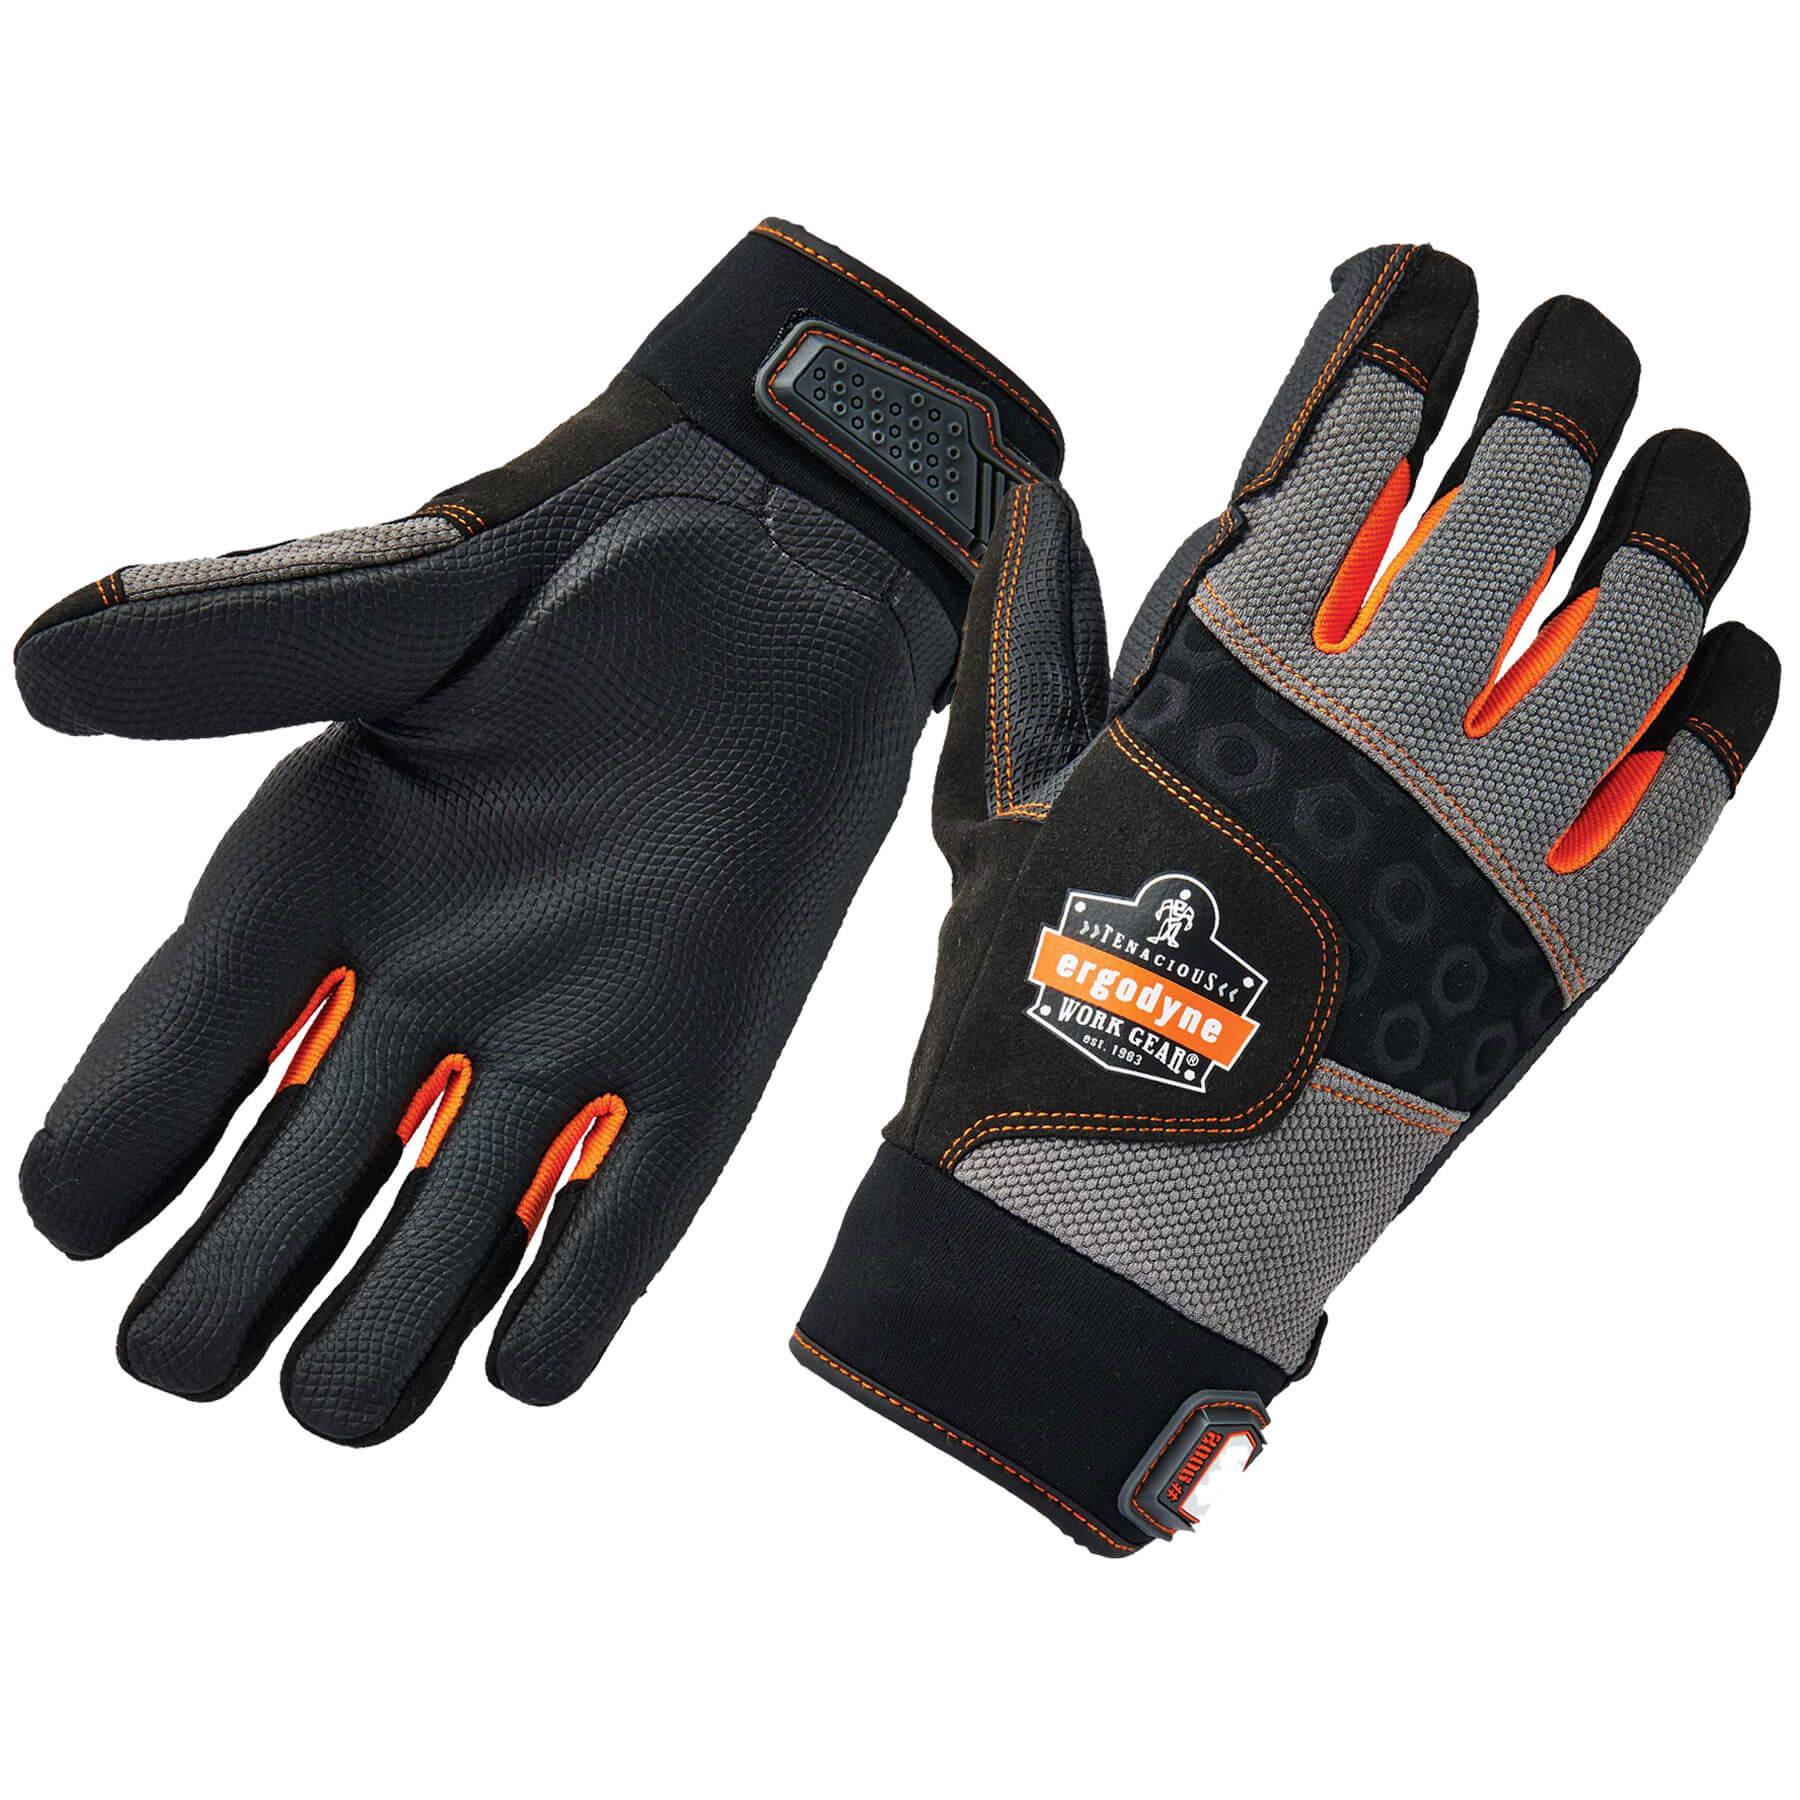 PROFLEX 9002 CERTIFIED ANTI-VIBE GLOVE - Impact & Anti-Vibe Gloves